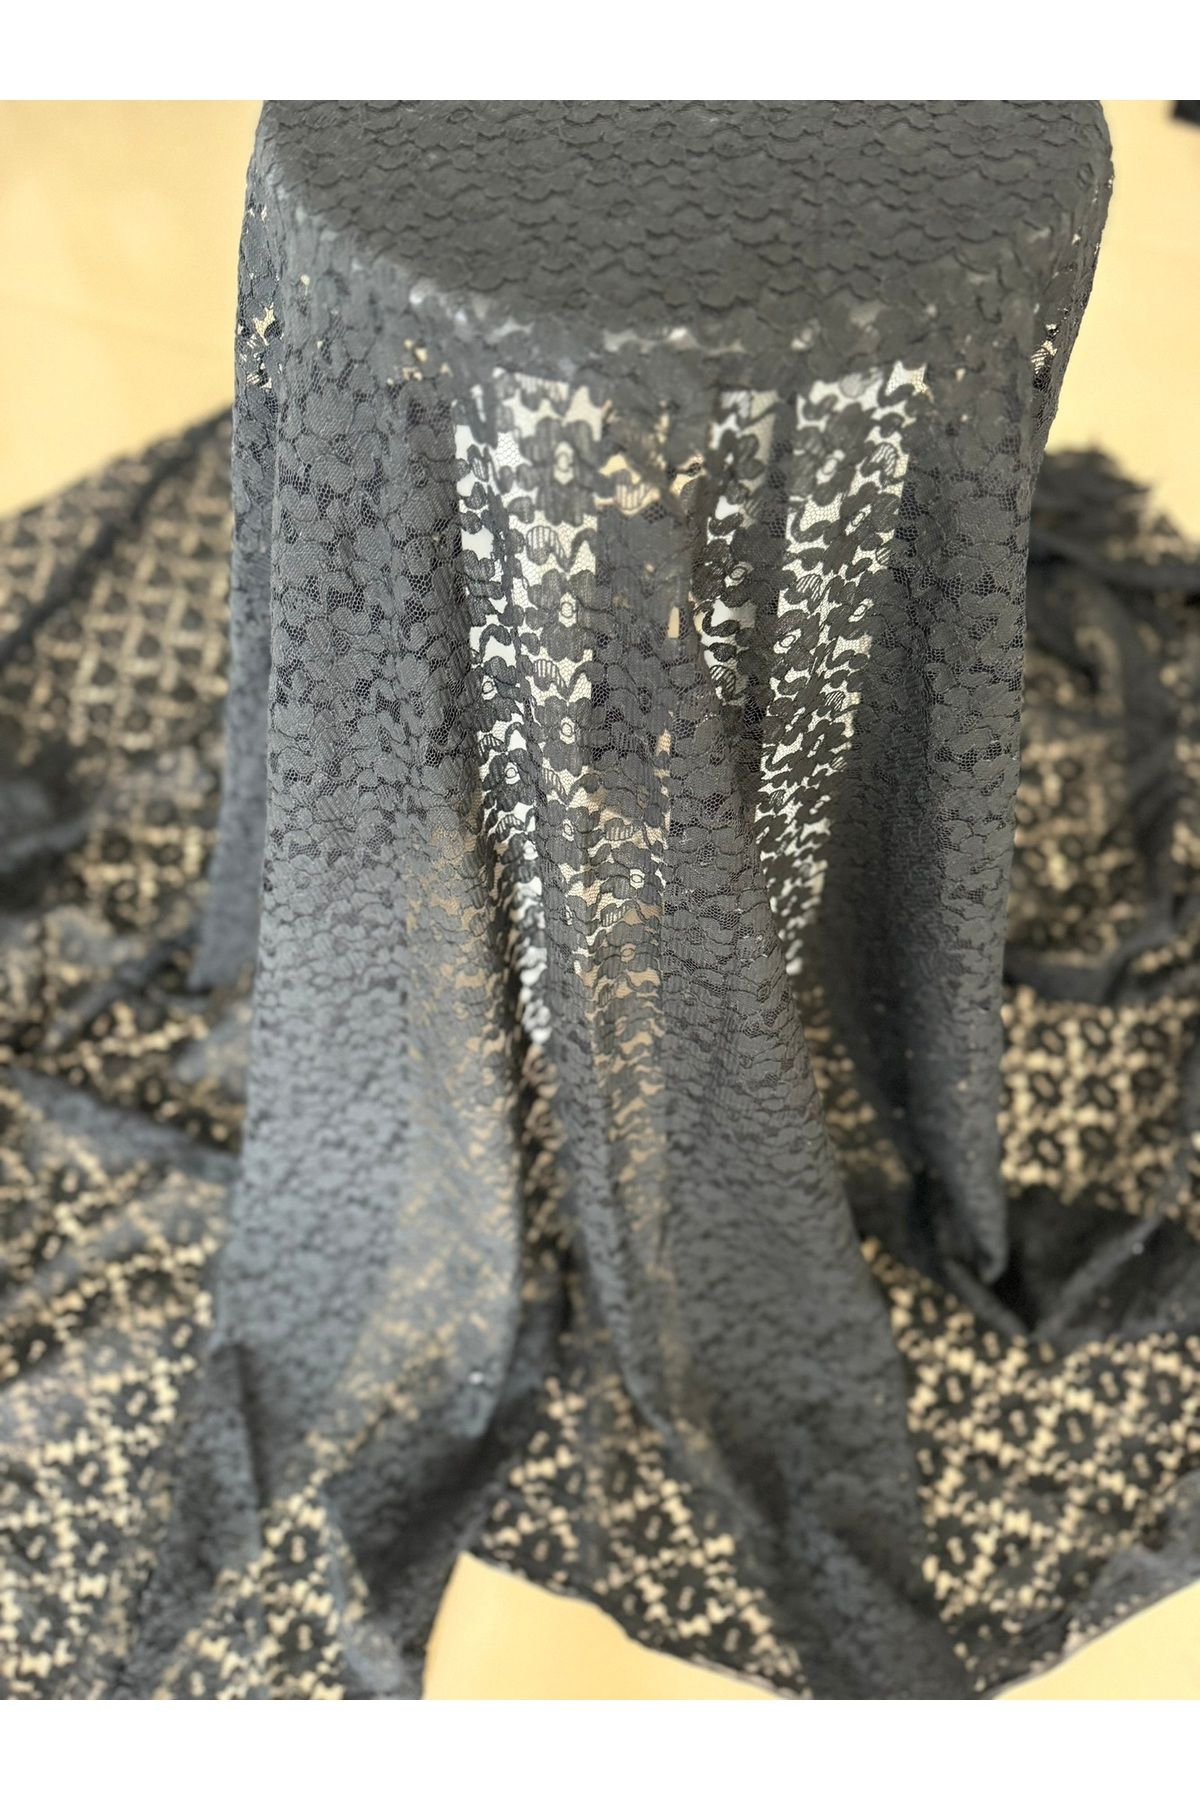 Kalben Kumaş Siyah Çiçekli Dantel Kumaş - Dantel Kumaş - Güpür Kumaş (115X100 CM)